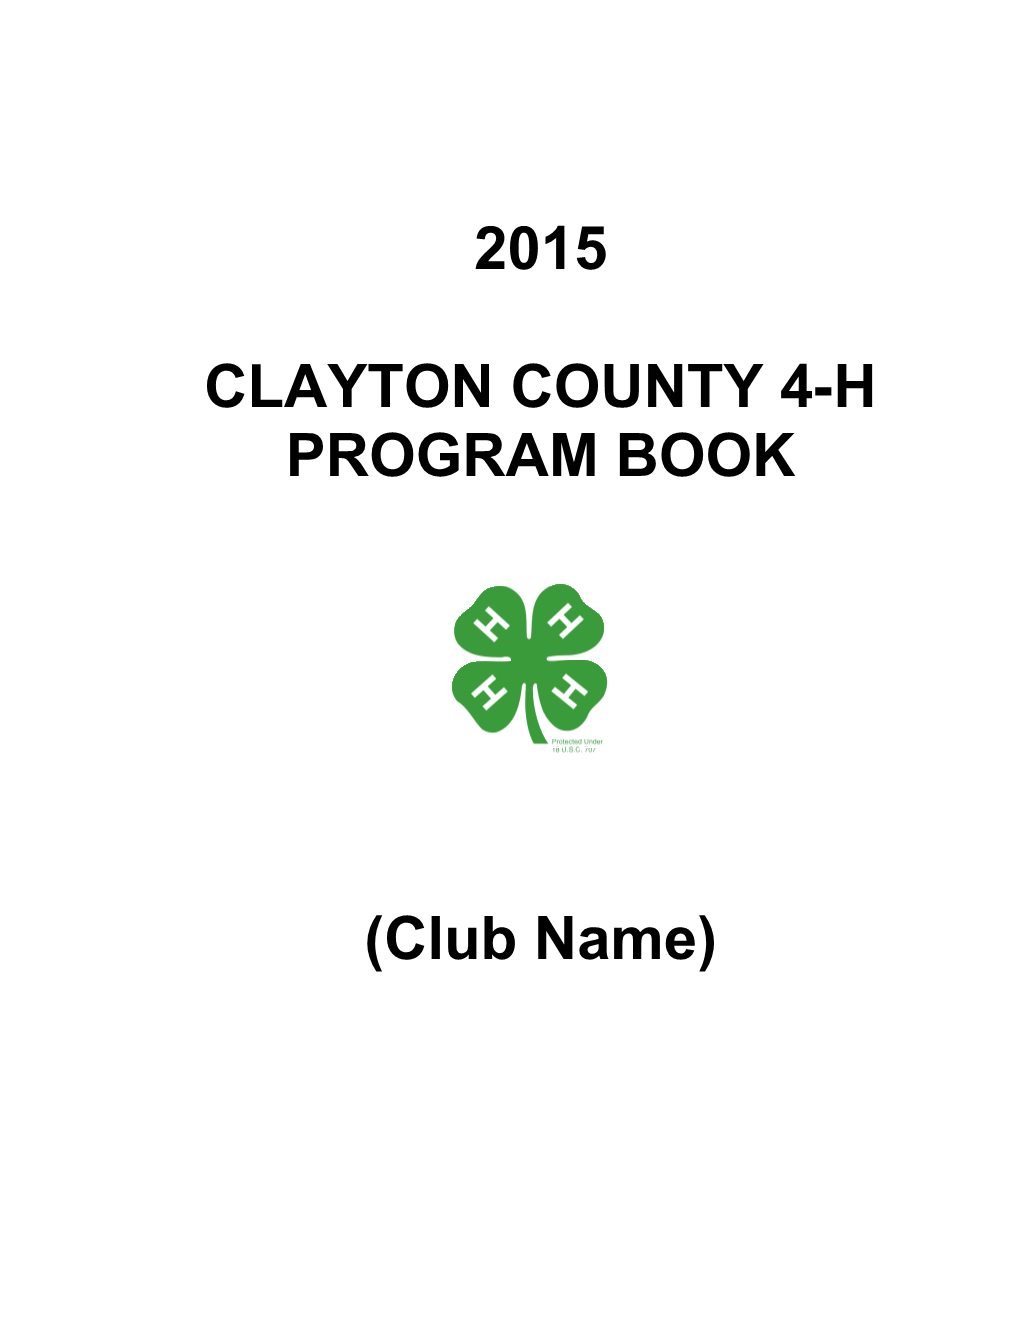 Clayton County 4-H